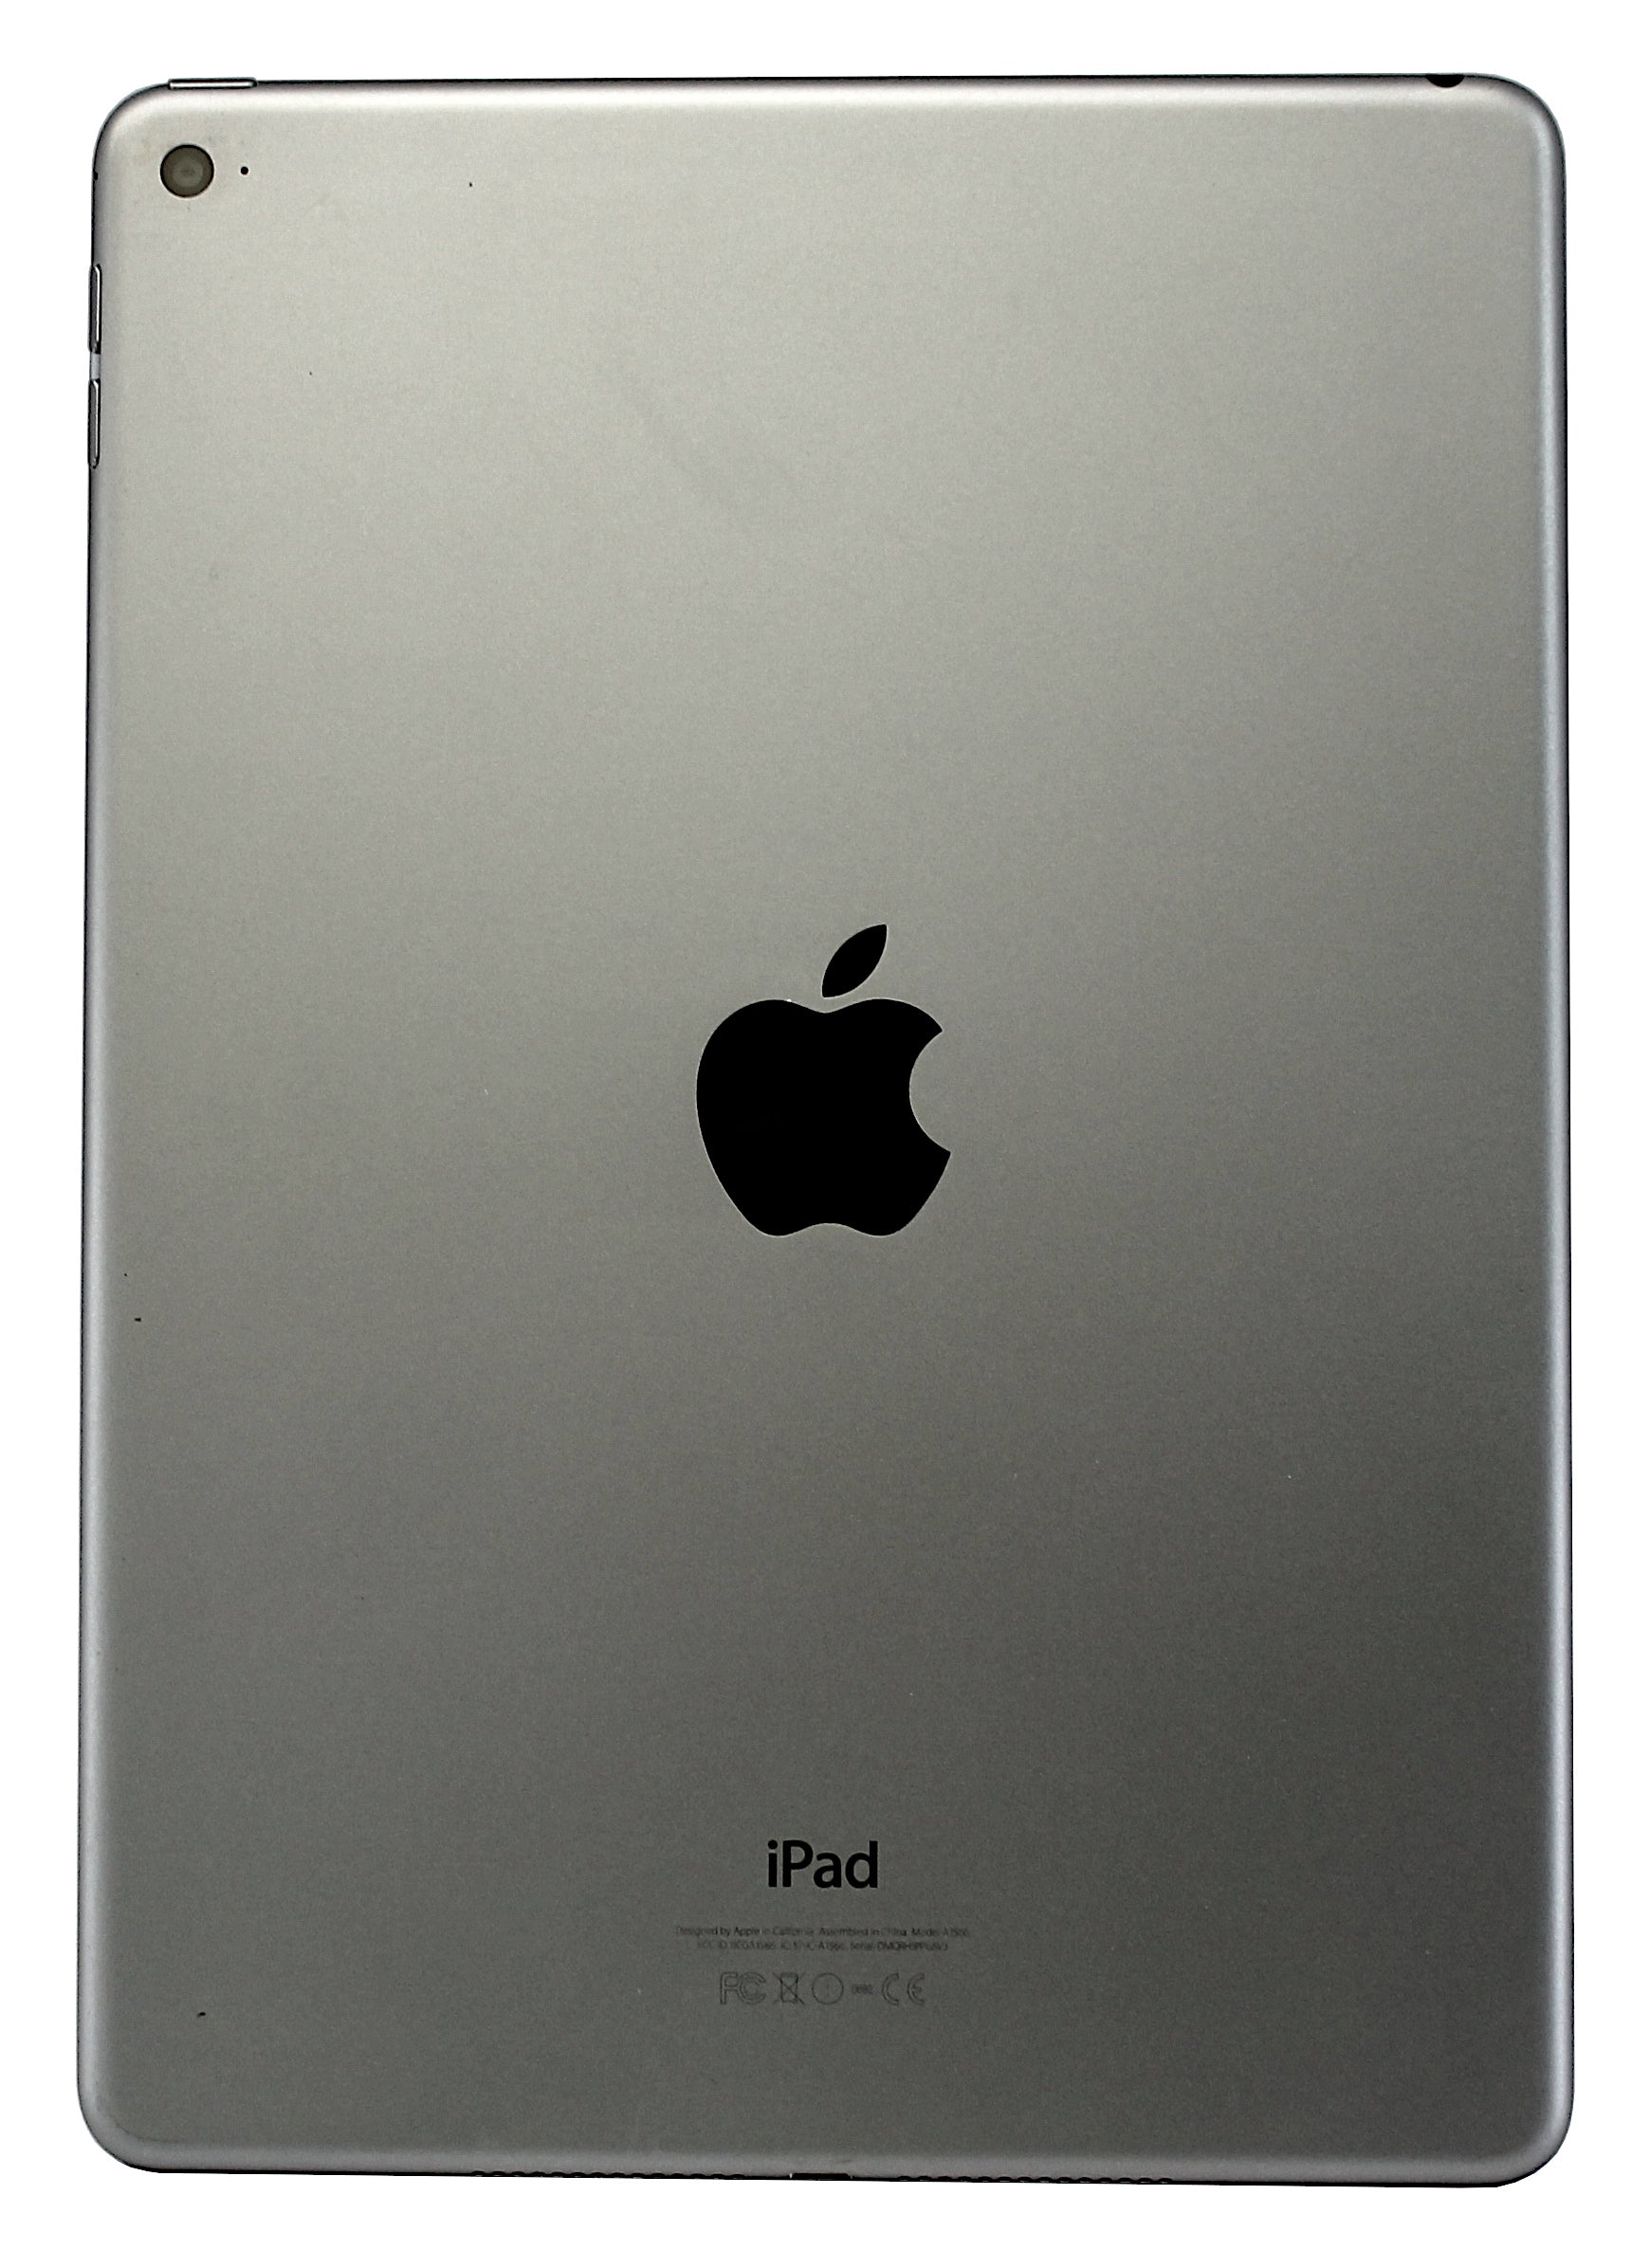 Apple iPad Air 2 Tablet, 16GB, WiFi, Space Gray, A1566